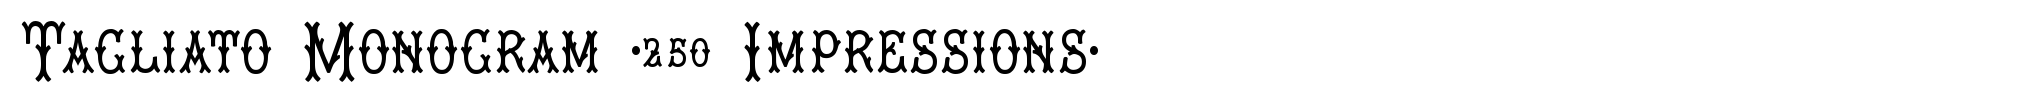 Tagliato Monogram (250 Impressions) image